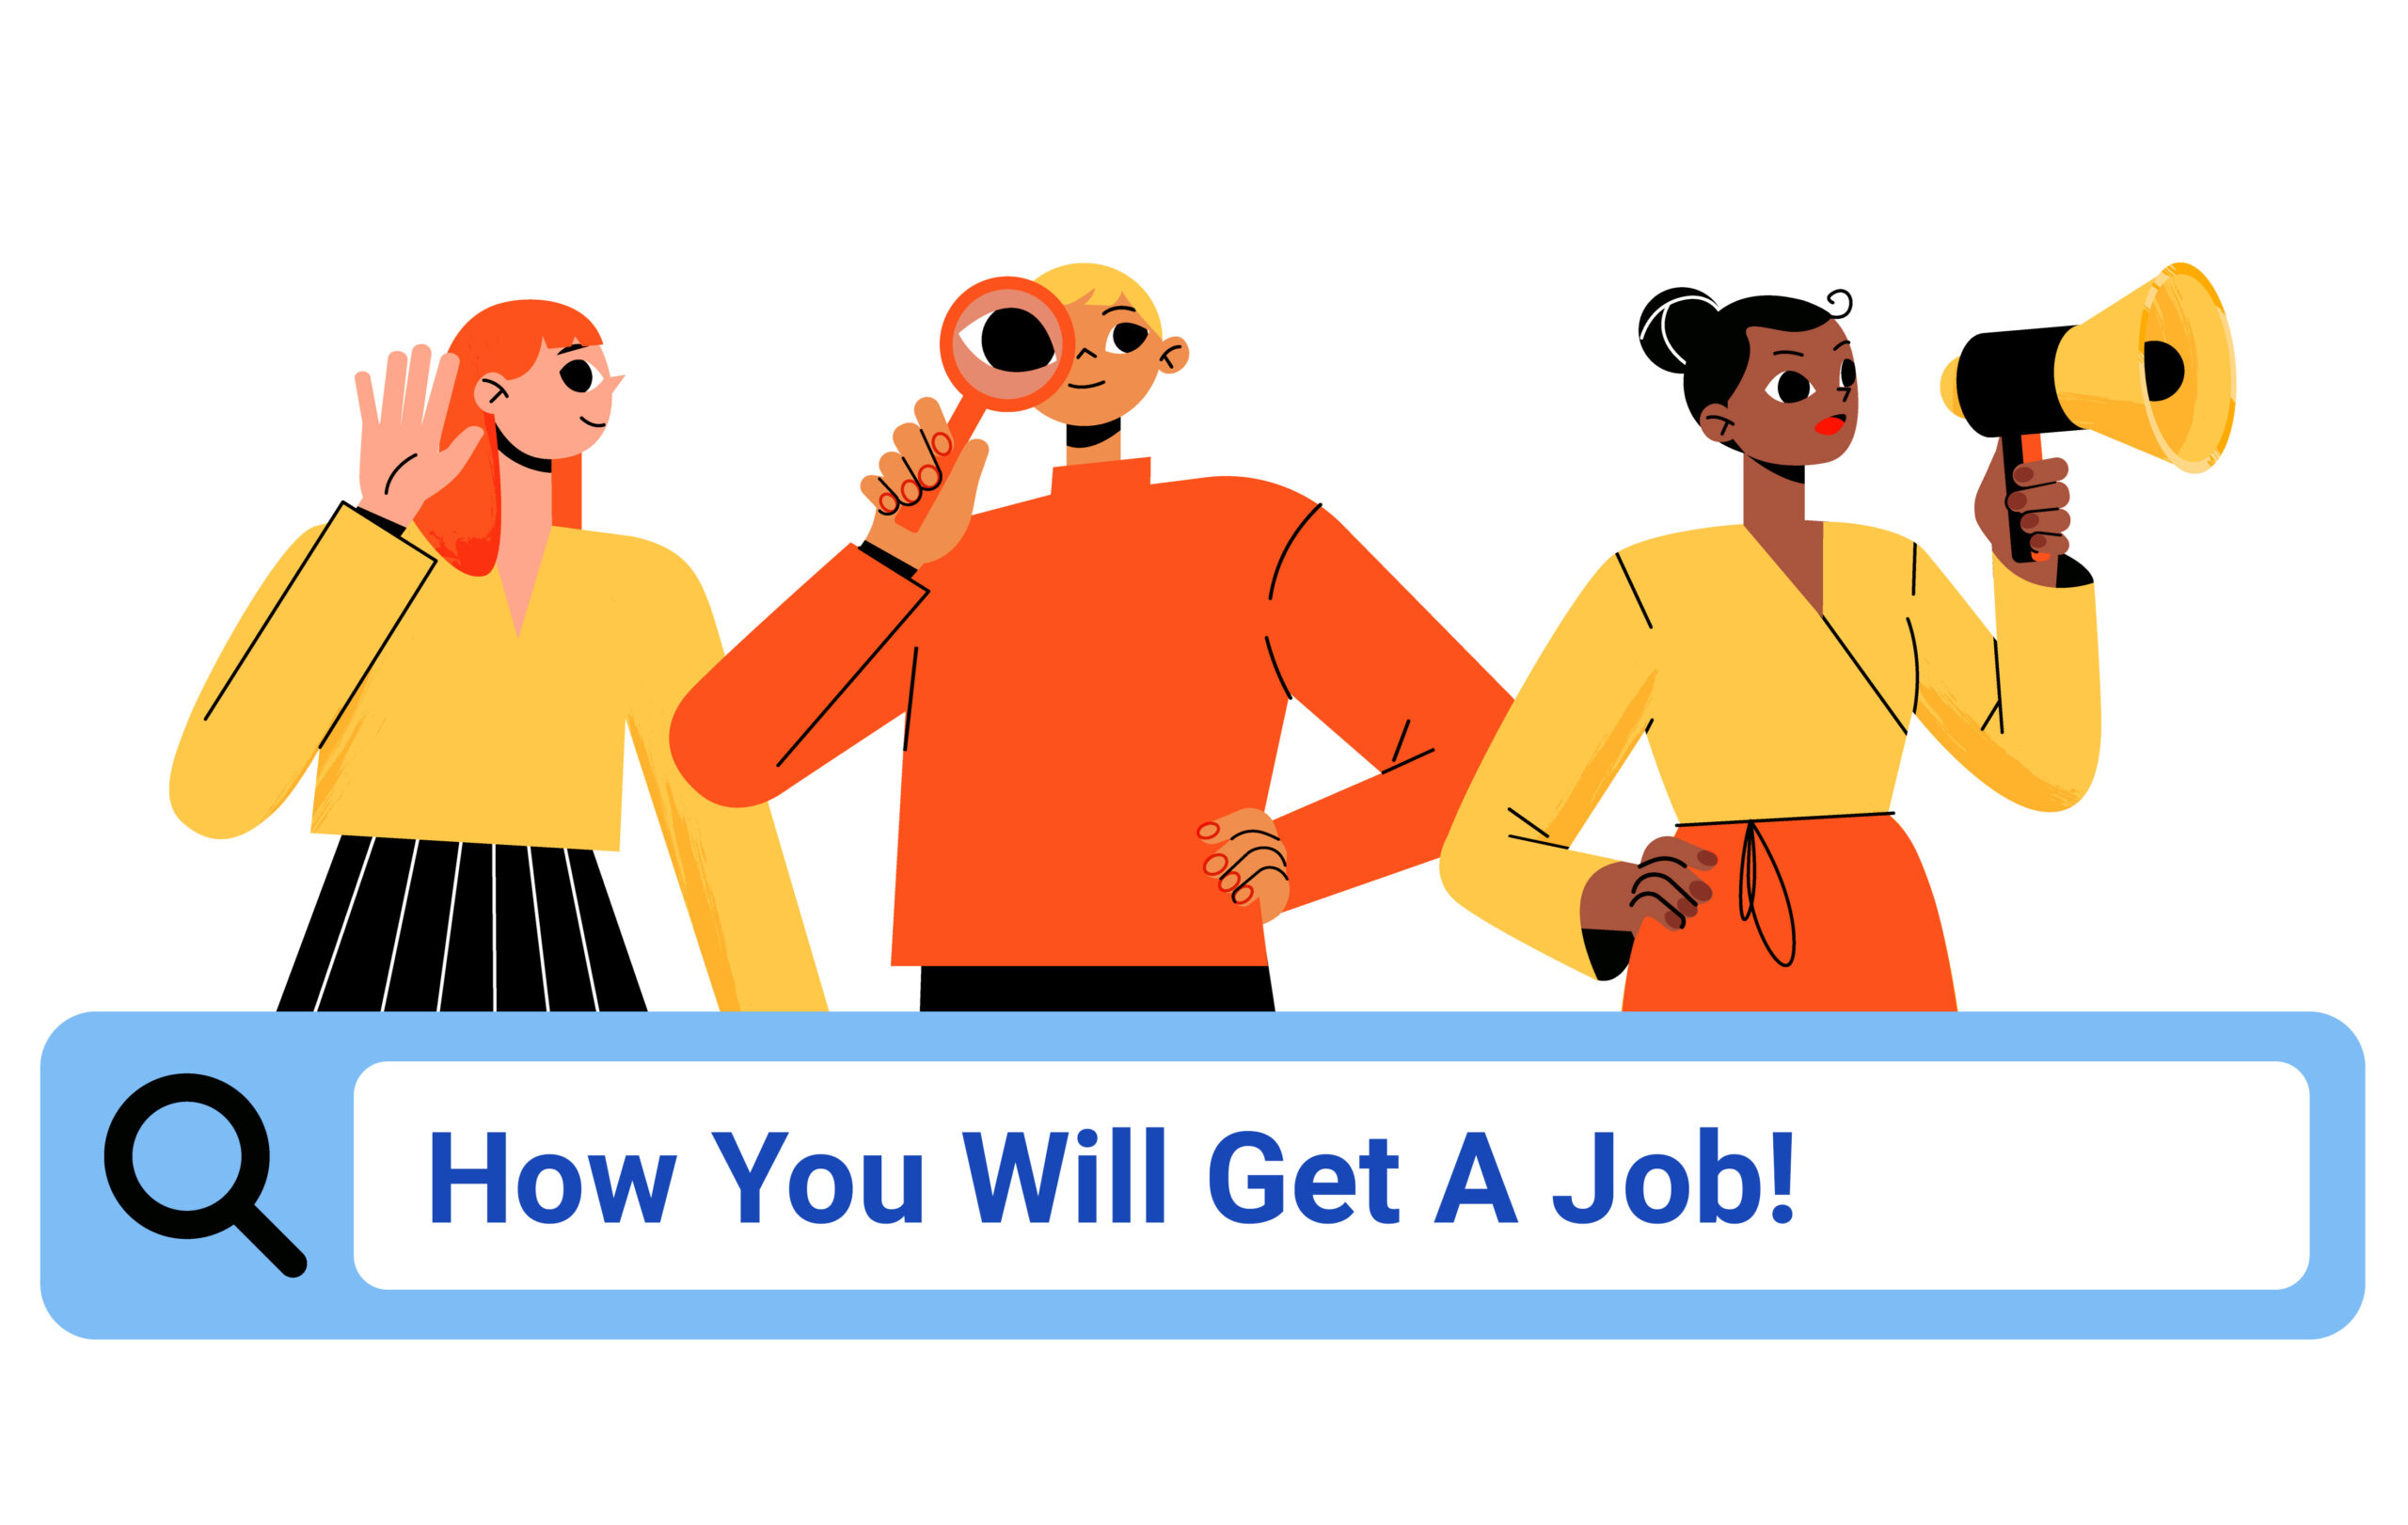 Unit- 2 : How You Will Get A Job